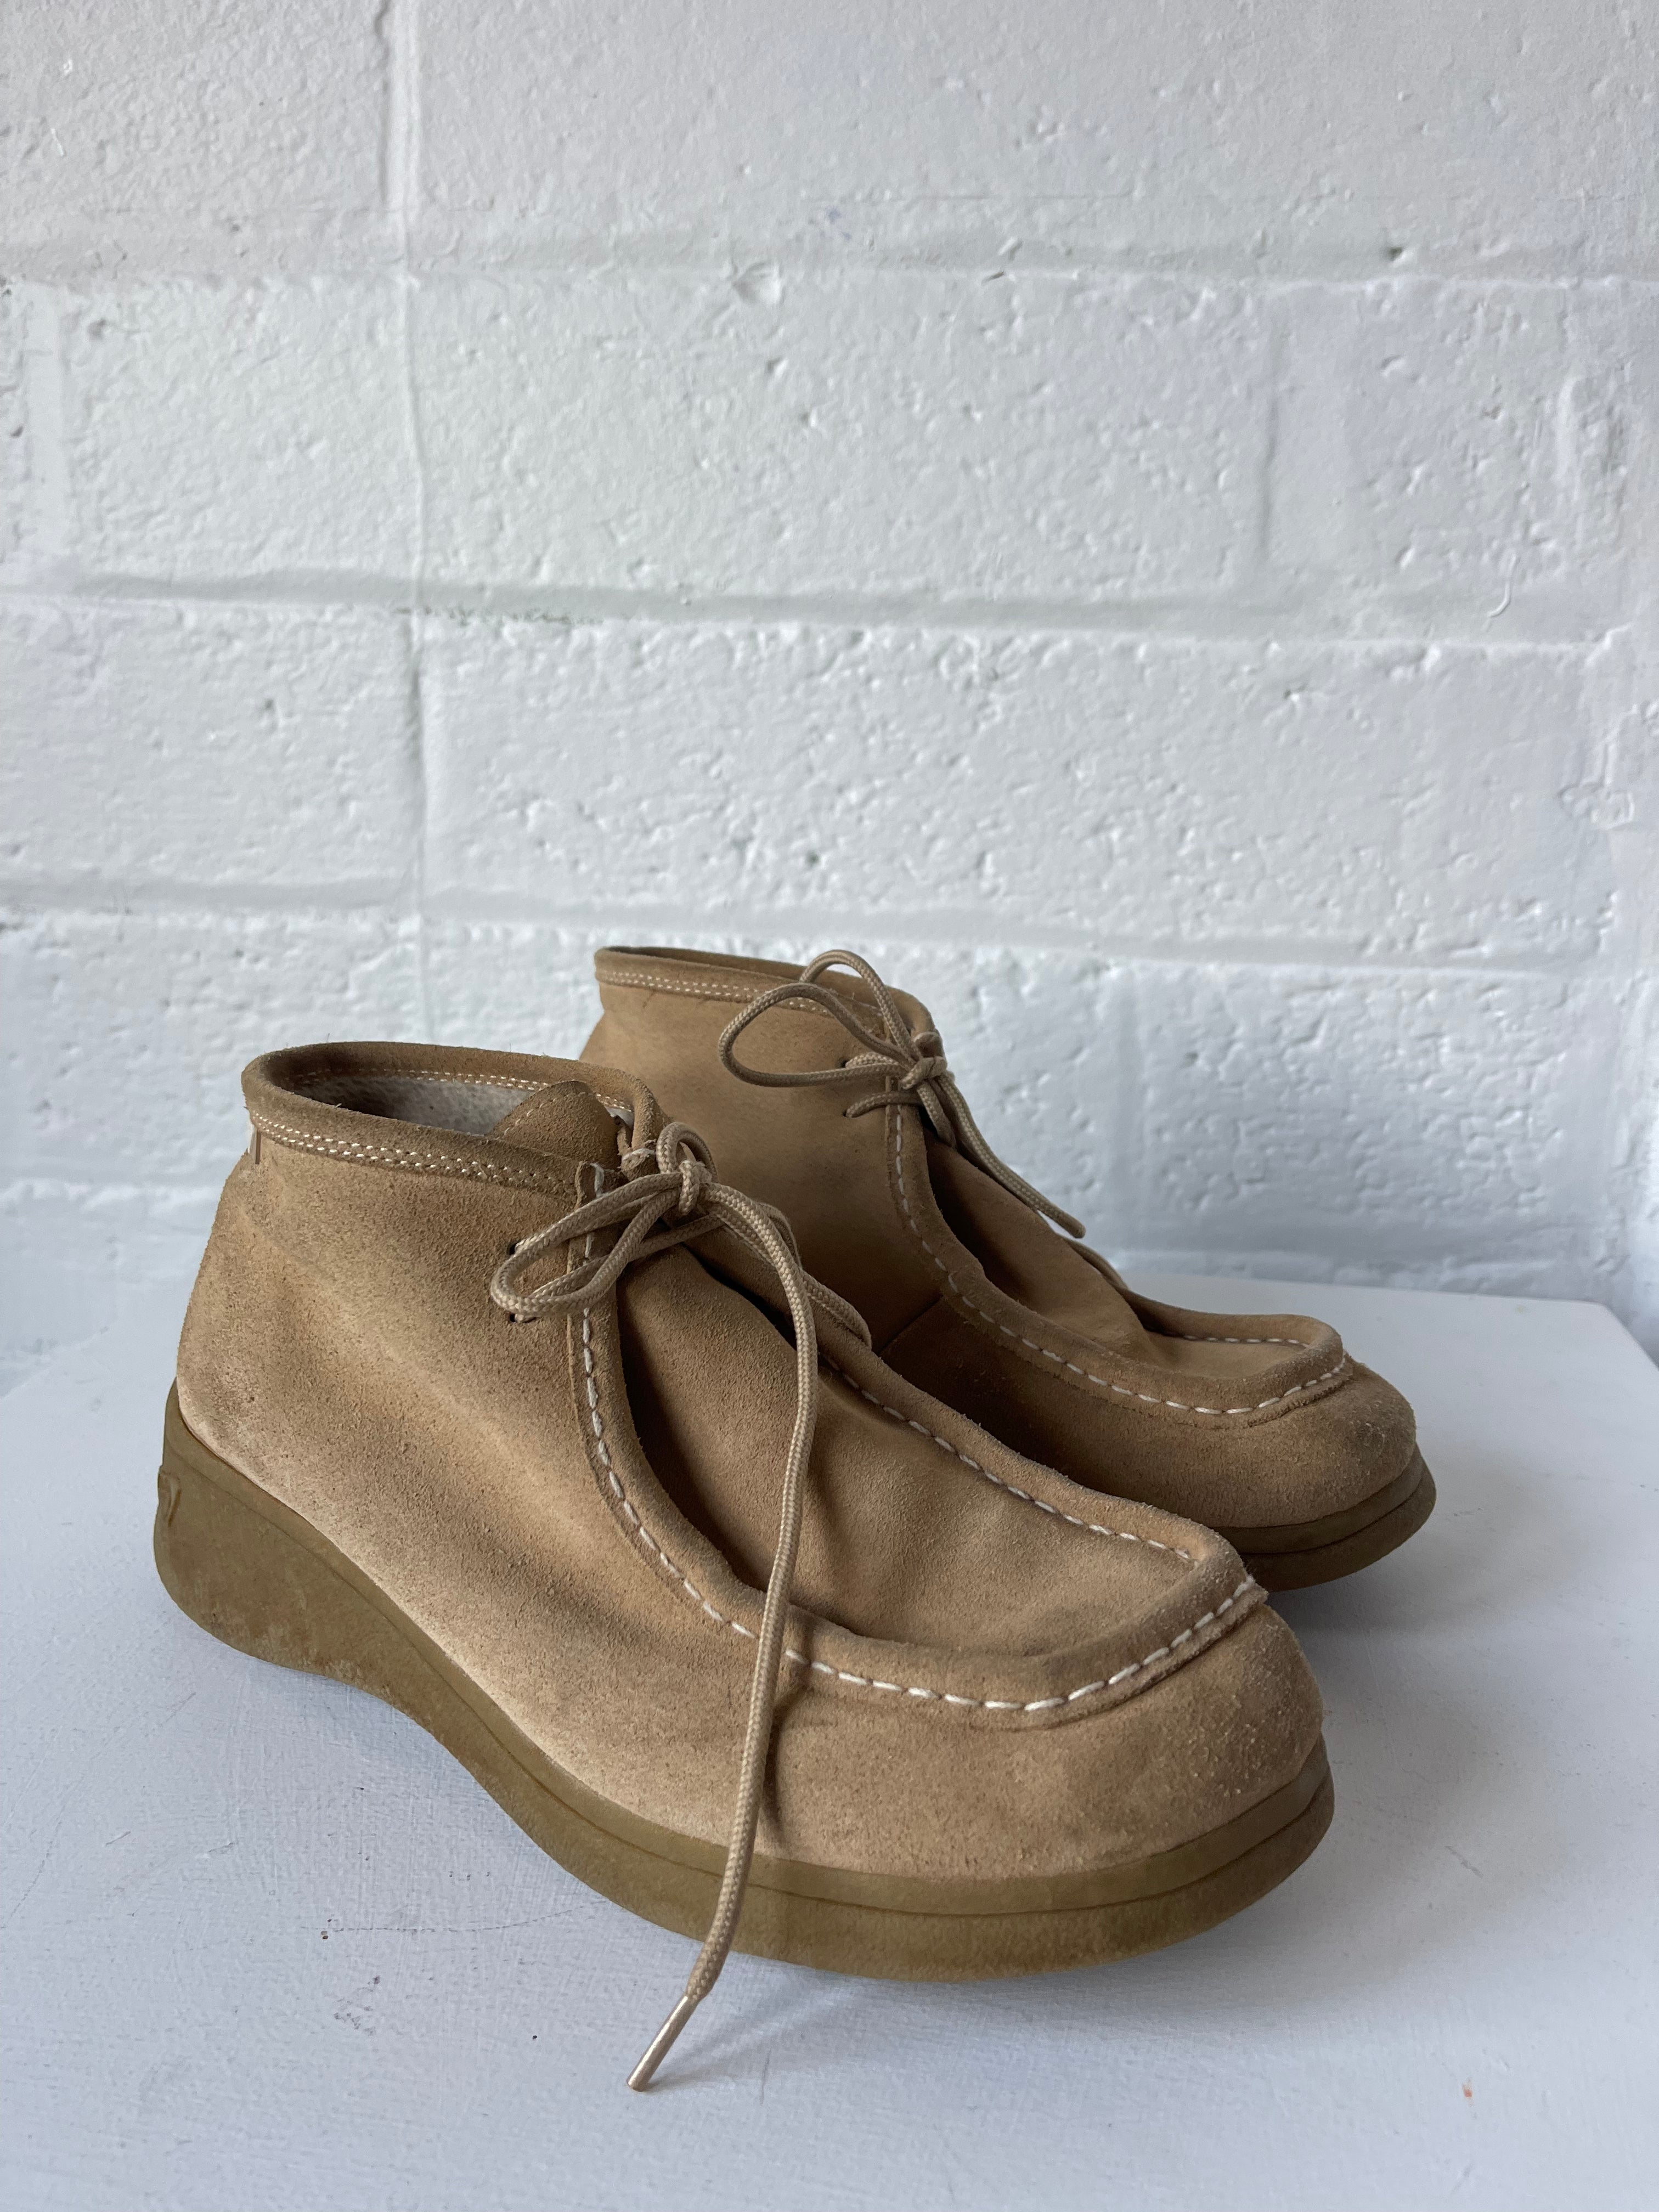 Vintage Roxy Suede Boots (9)